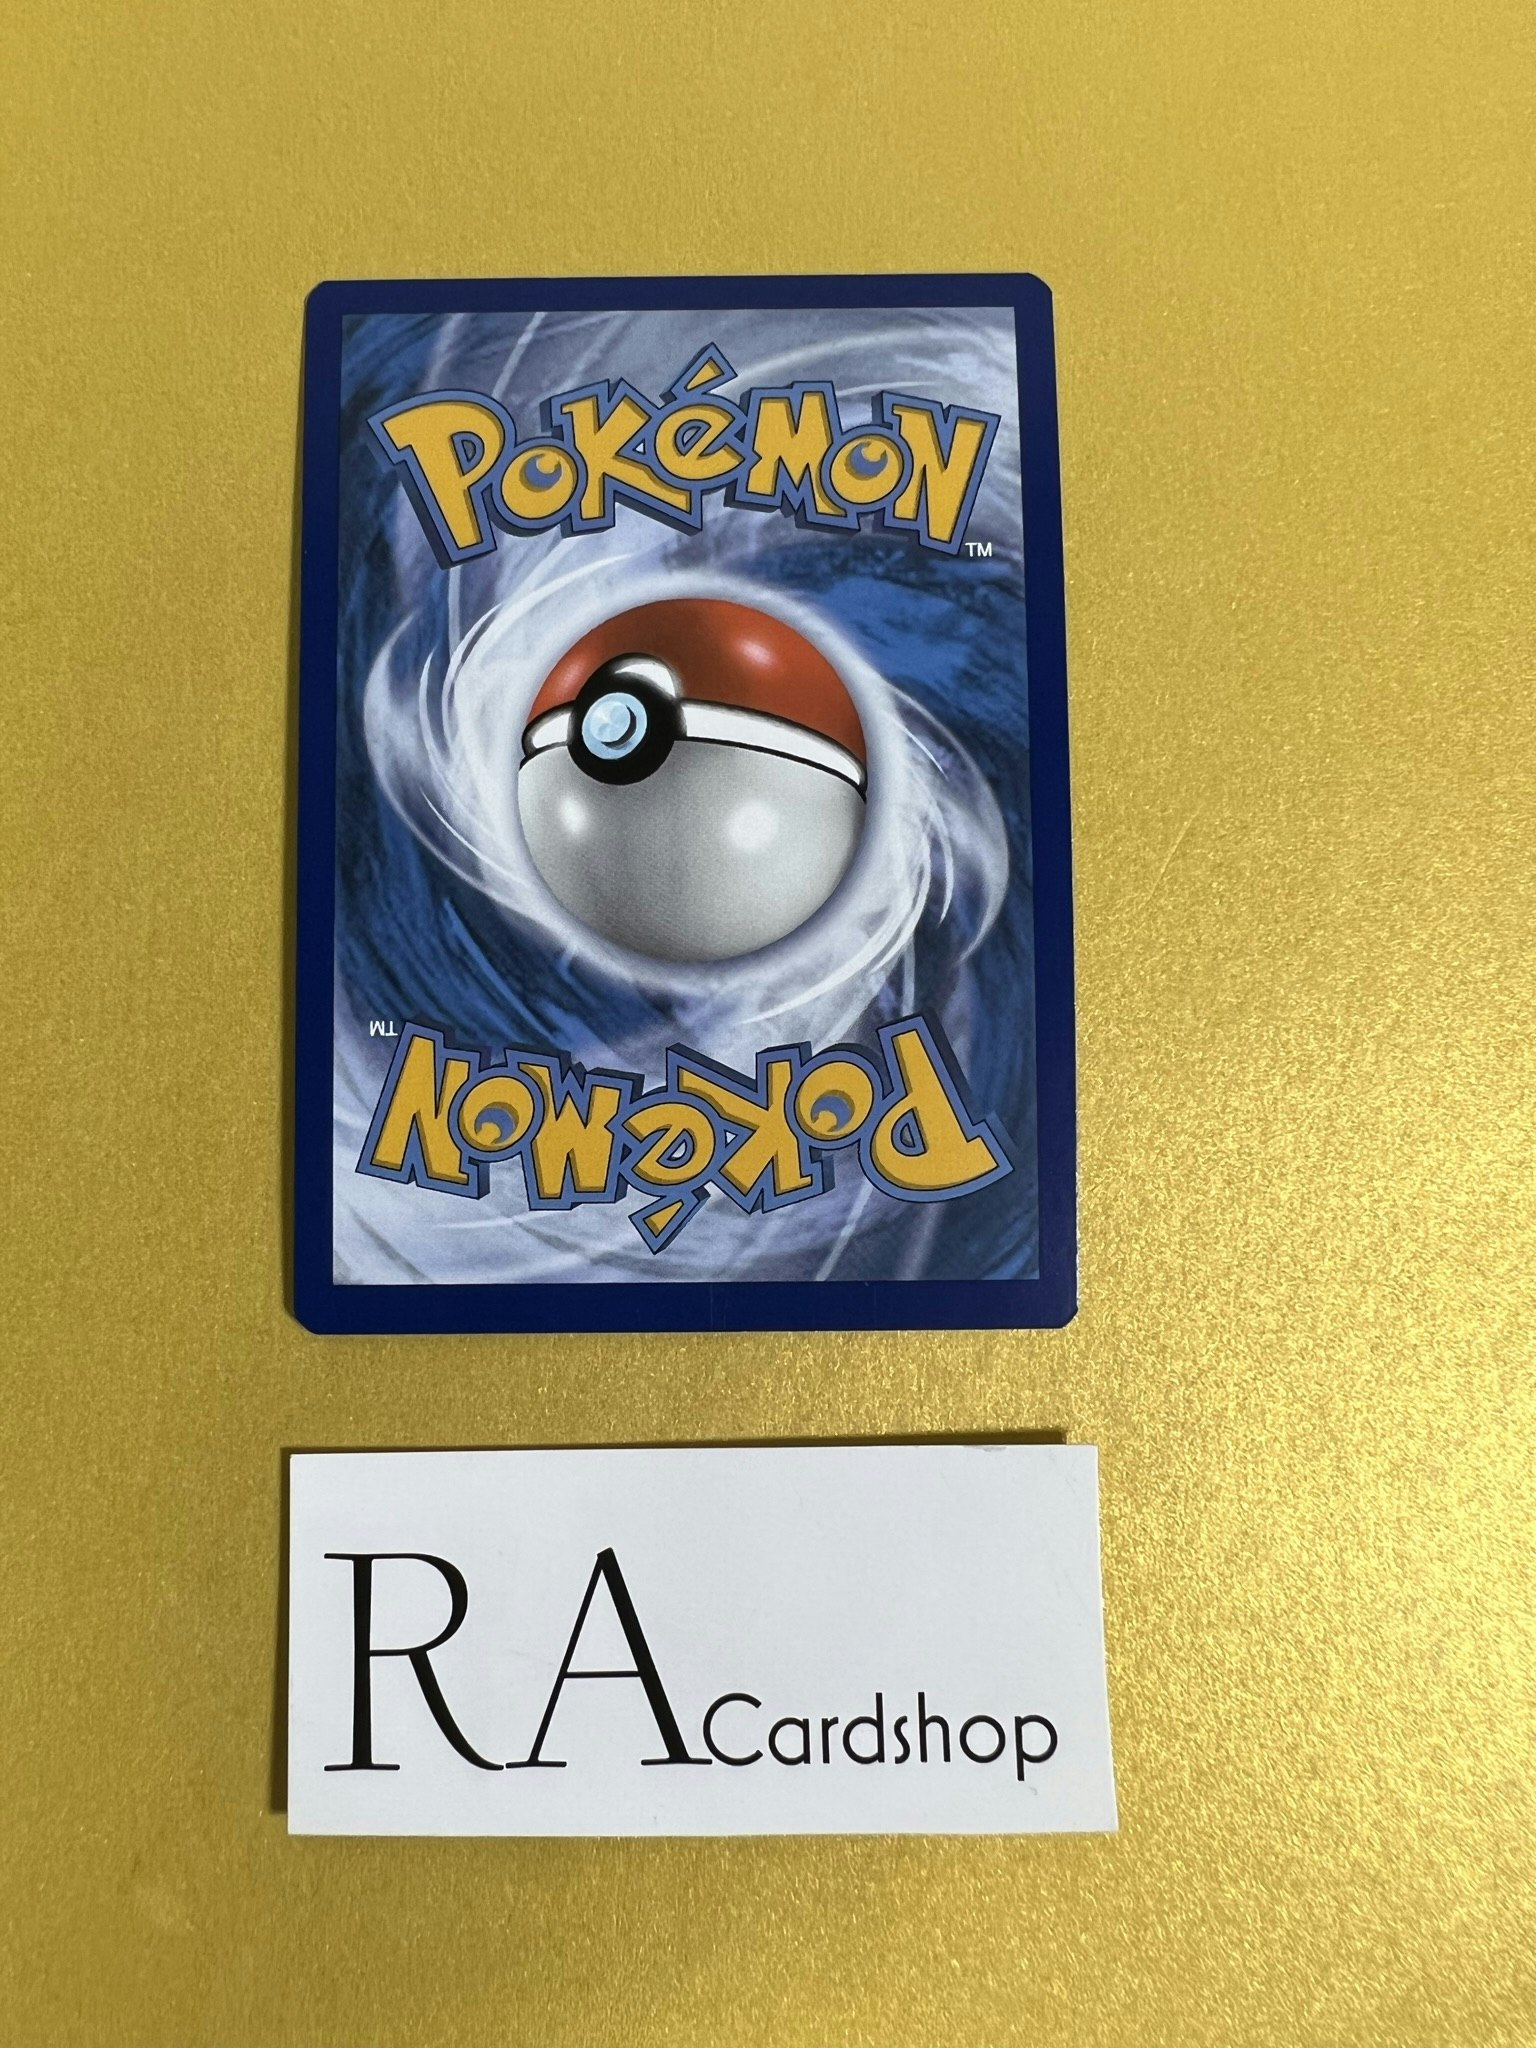 Venesaur Holo Rare 003/078 Pokémon GO Pokémon